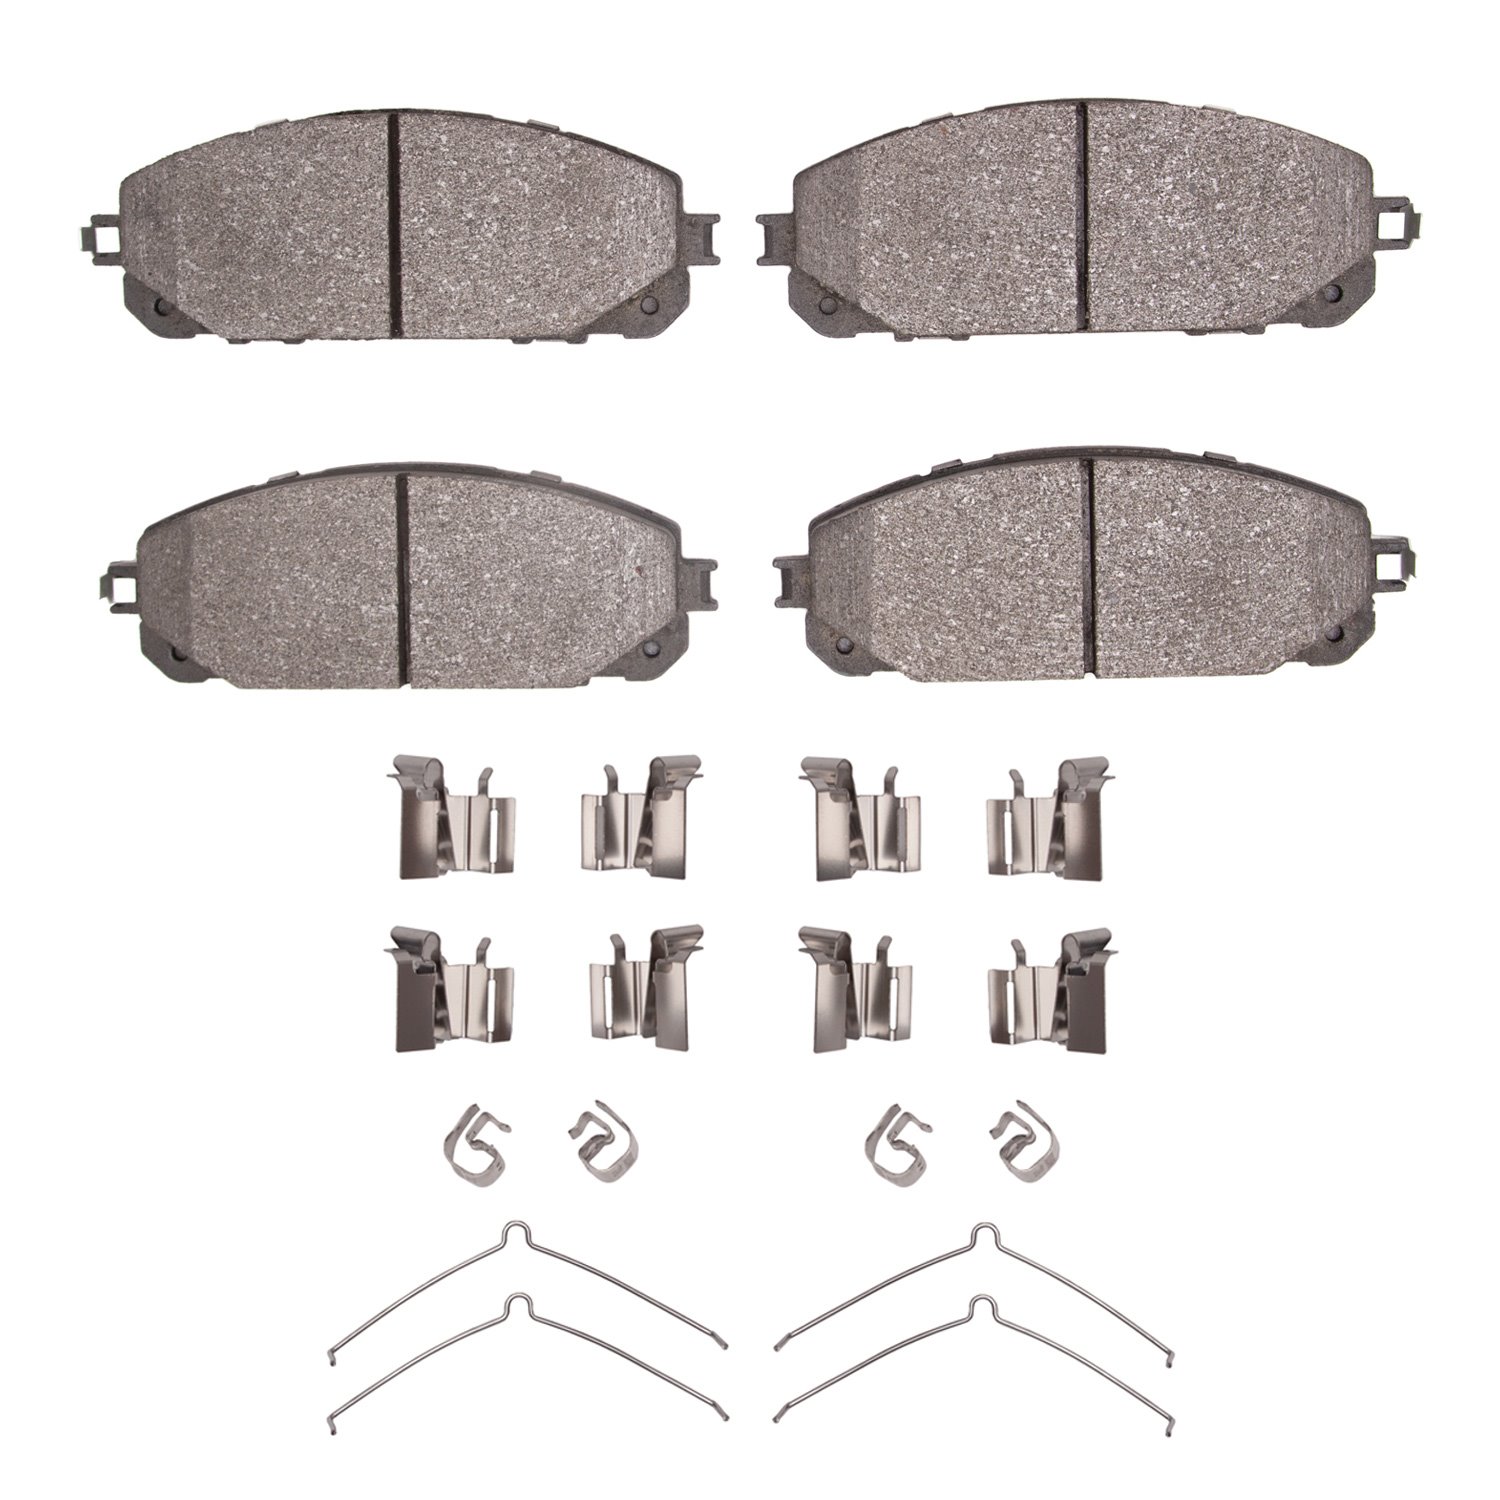 1600-1843-01 5000 Euro Ceramic Brake Pads & Hardware Kit, Fits Select Mopar, Position: Front